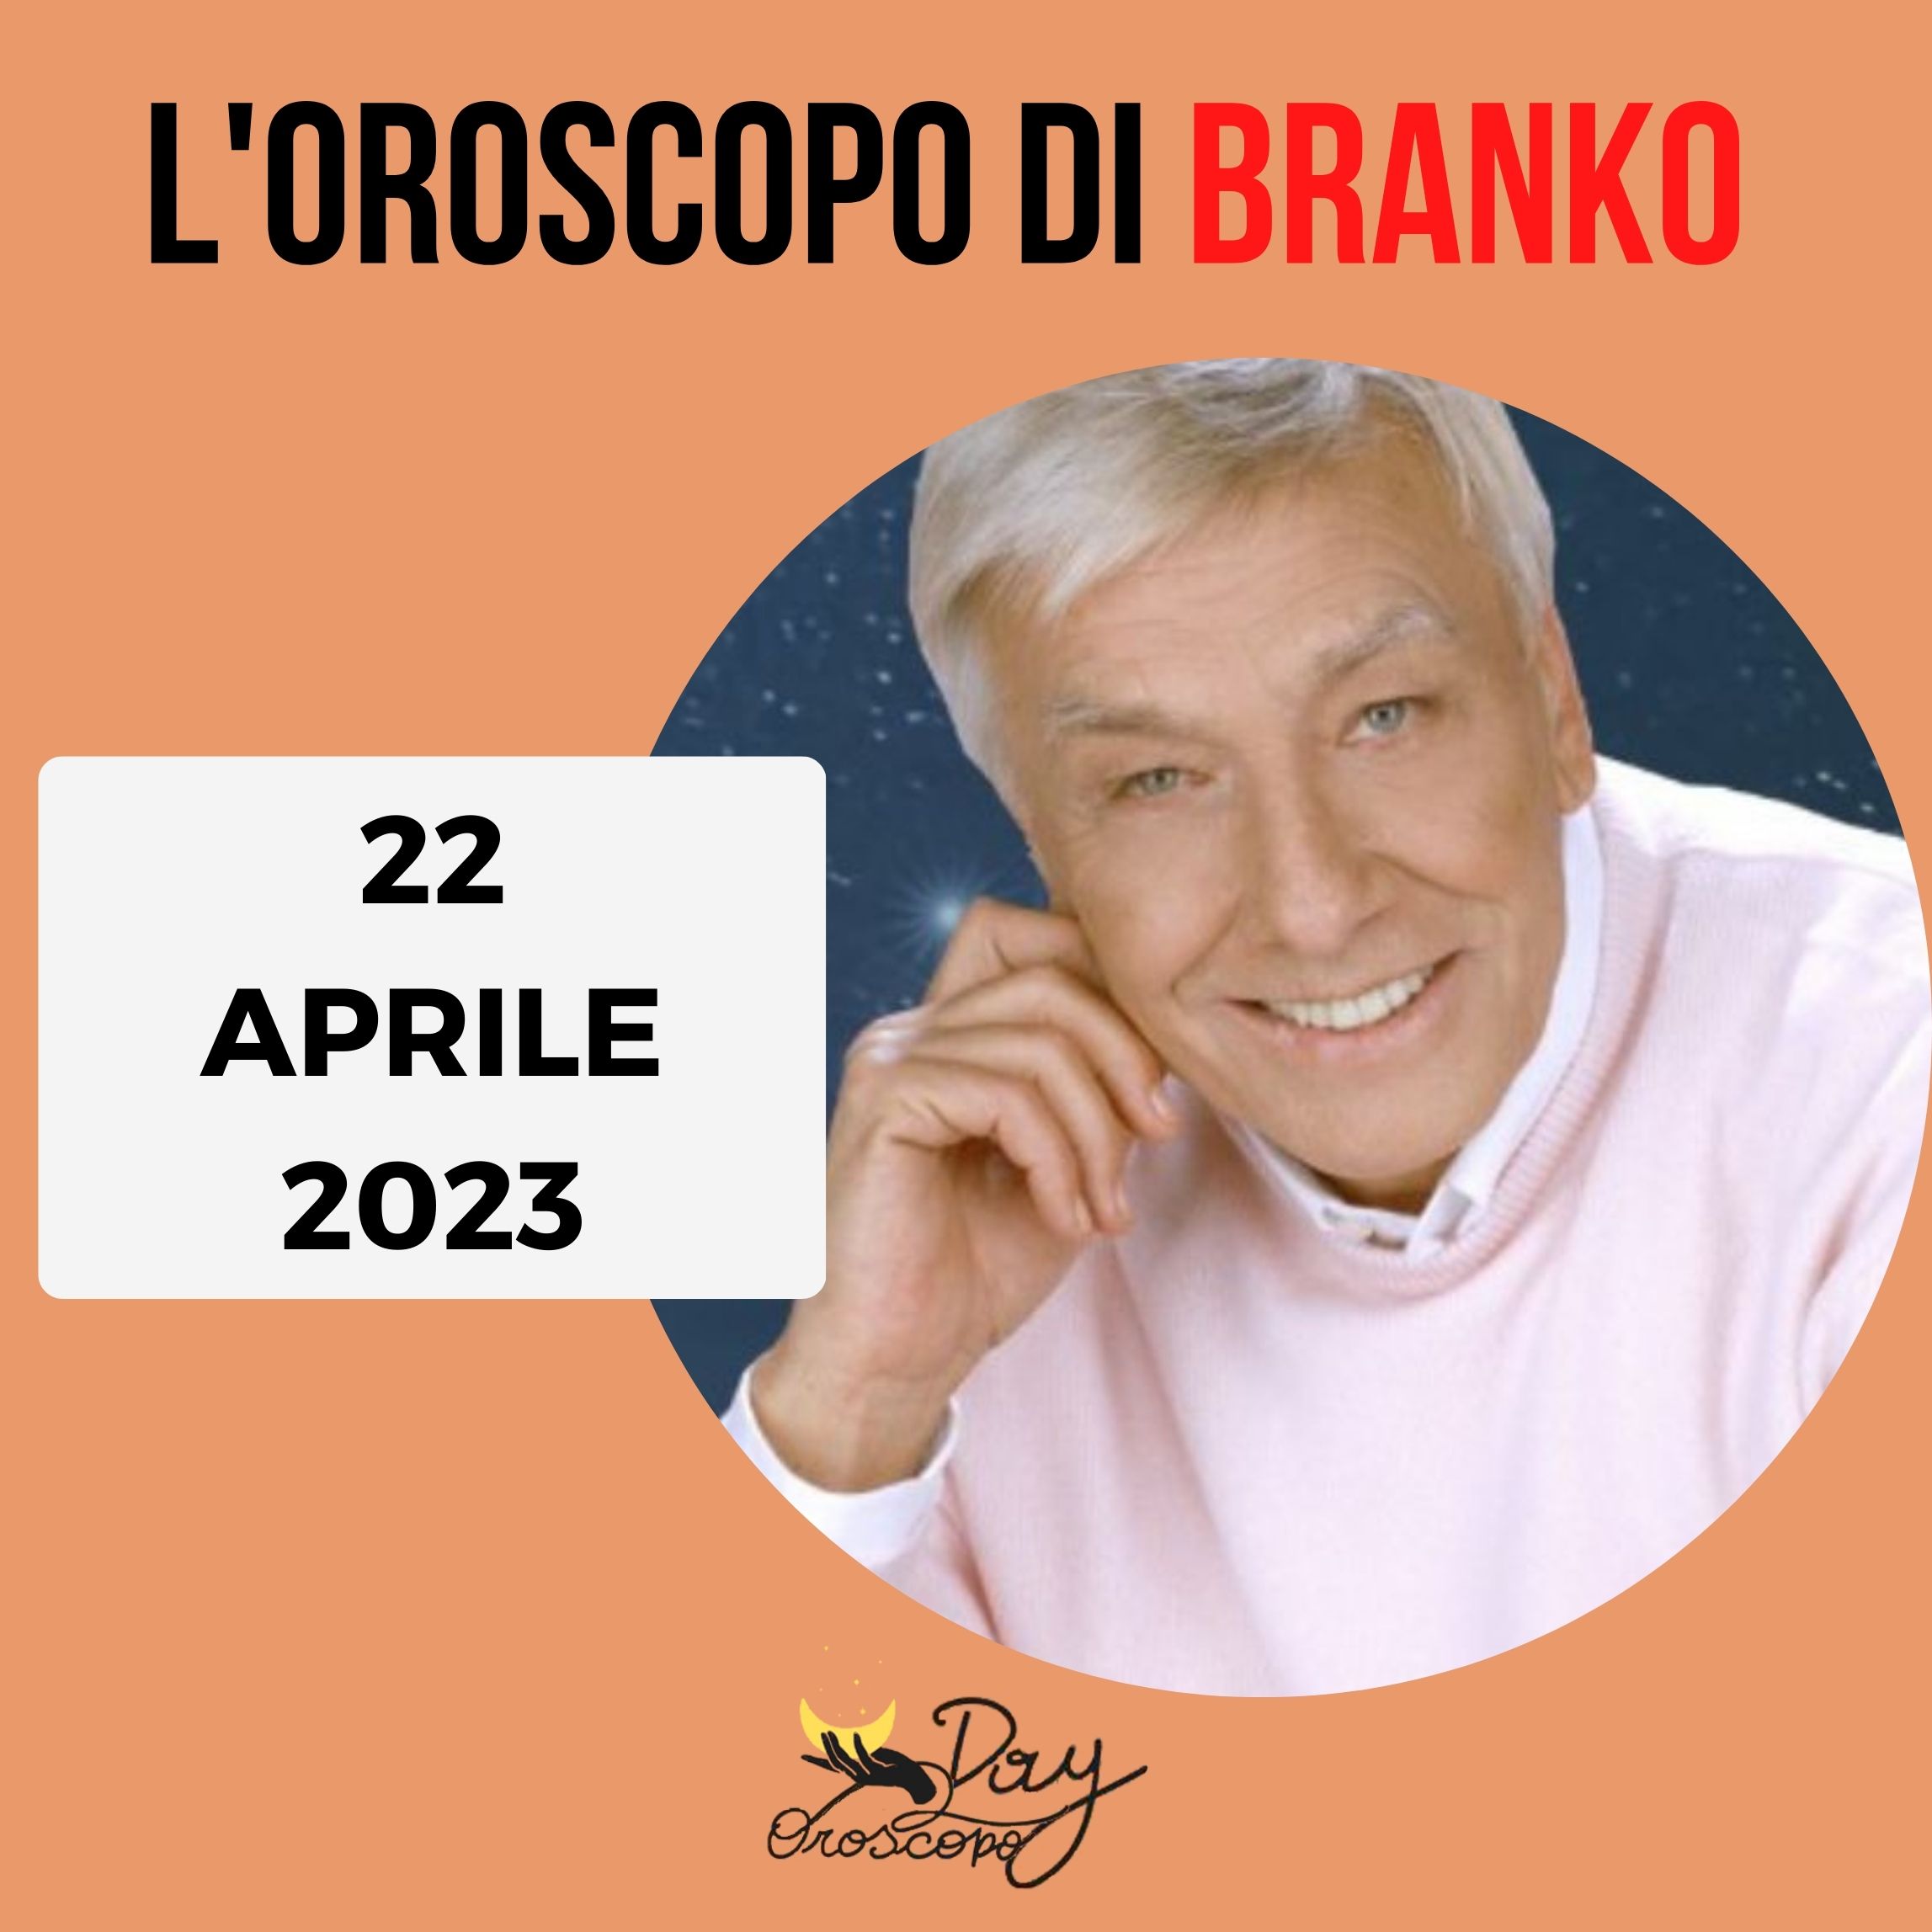 Oroscopo oggi domani Branko 22 aprile 2023